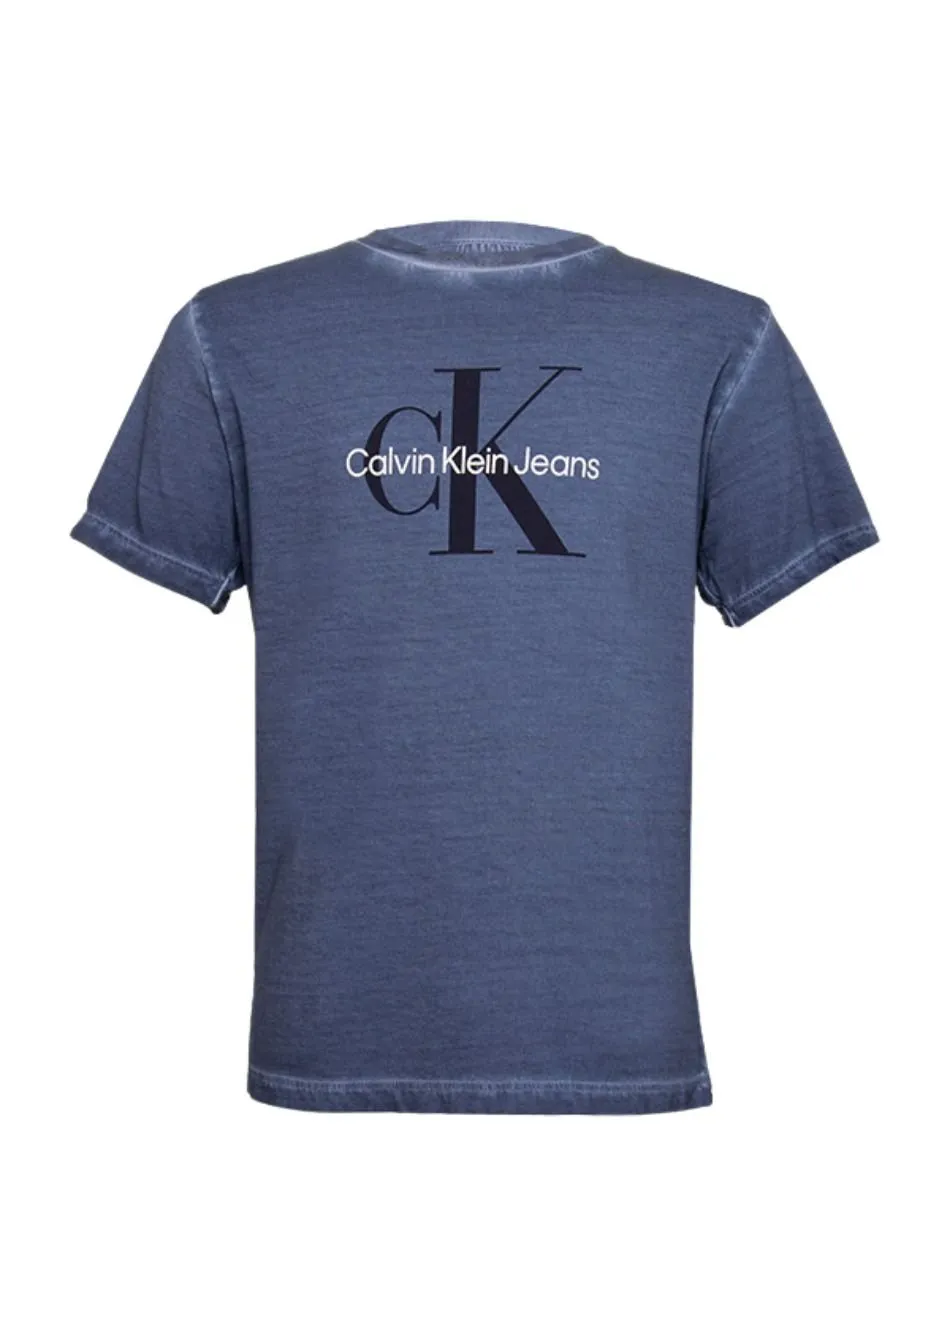 Camiseta Calvin Klein Jeans Infantil CK Índigo Tinto